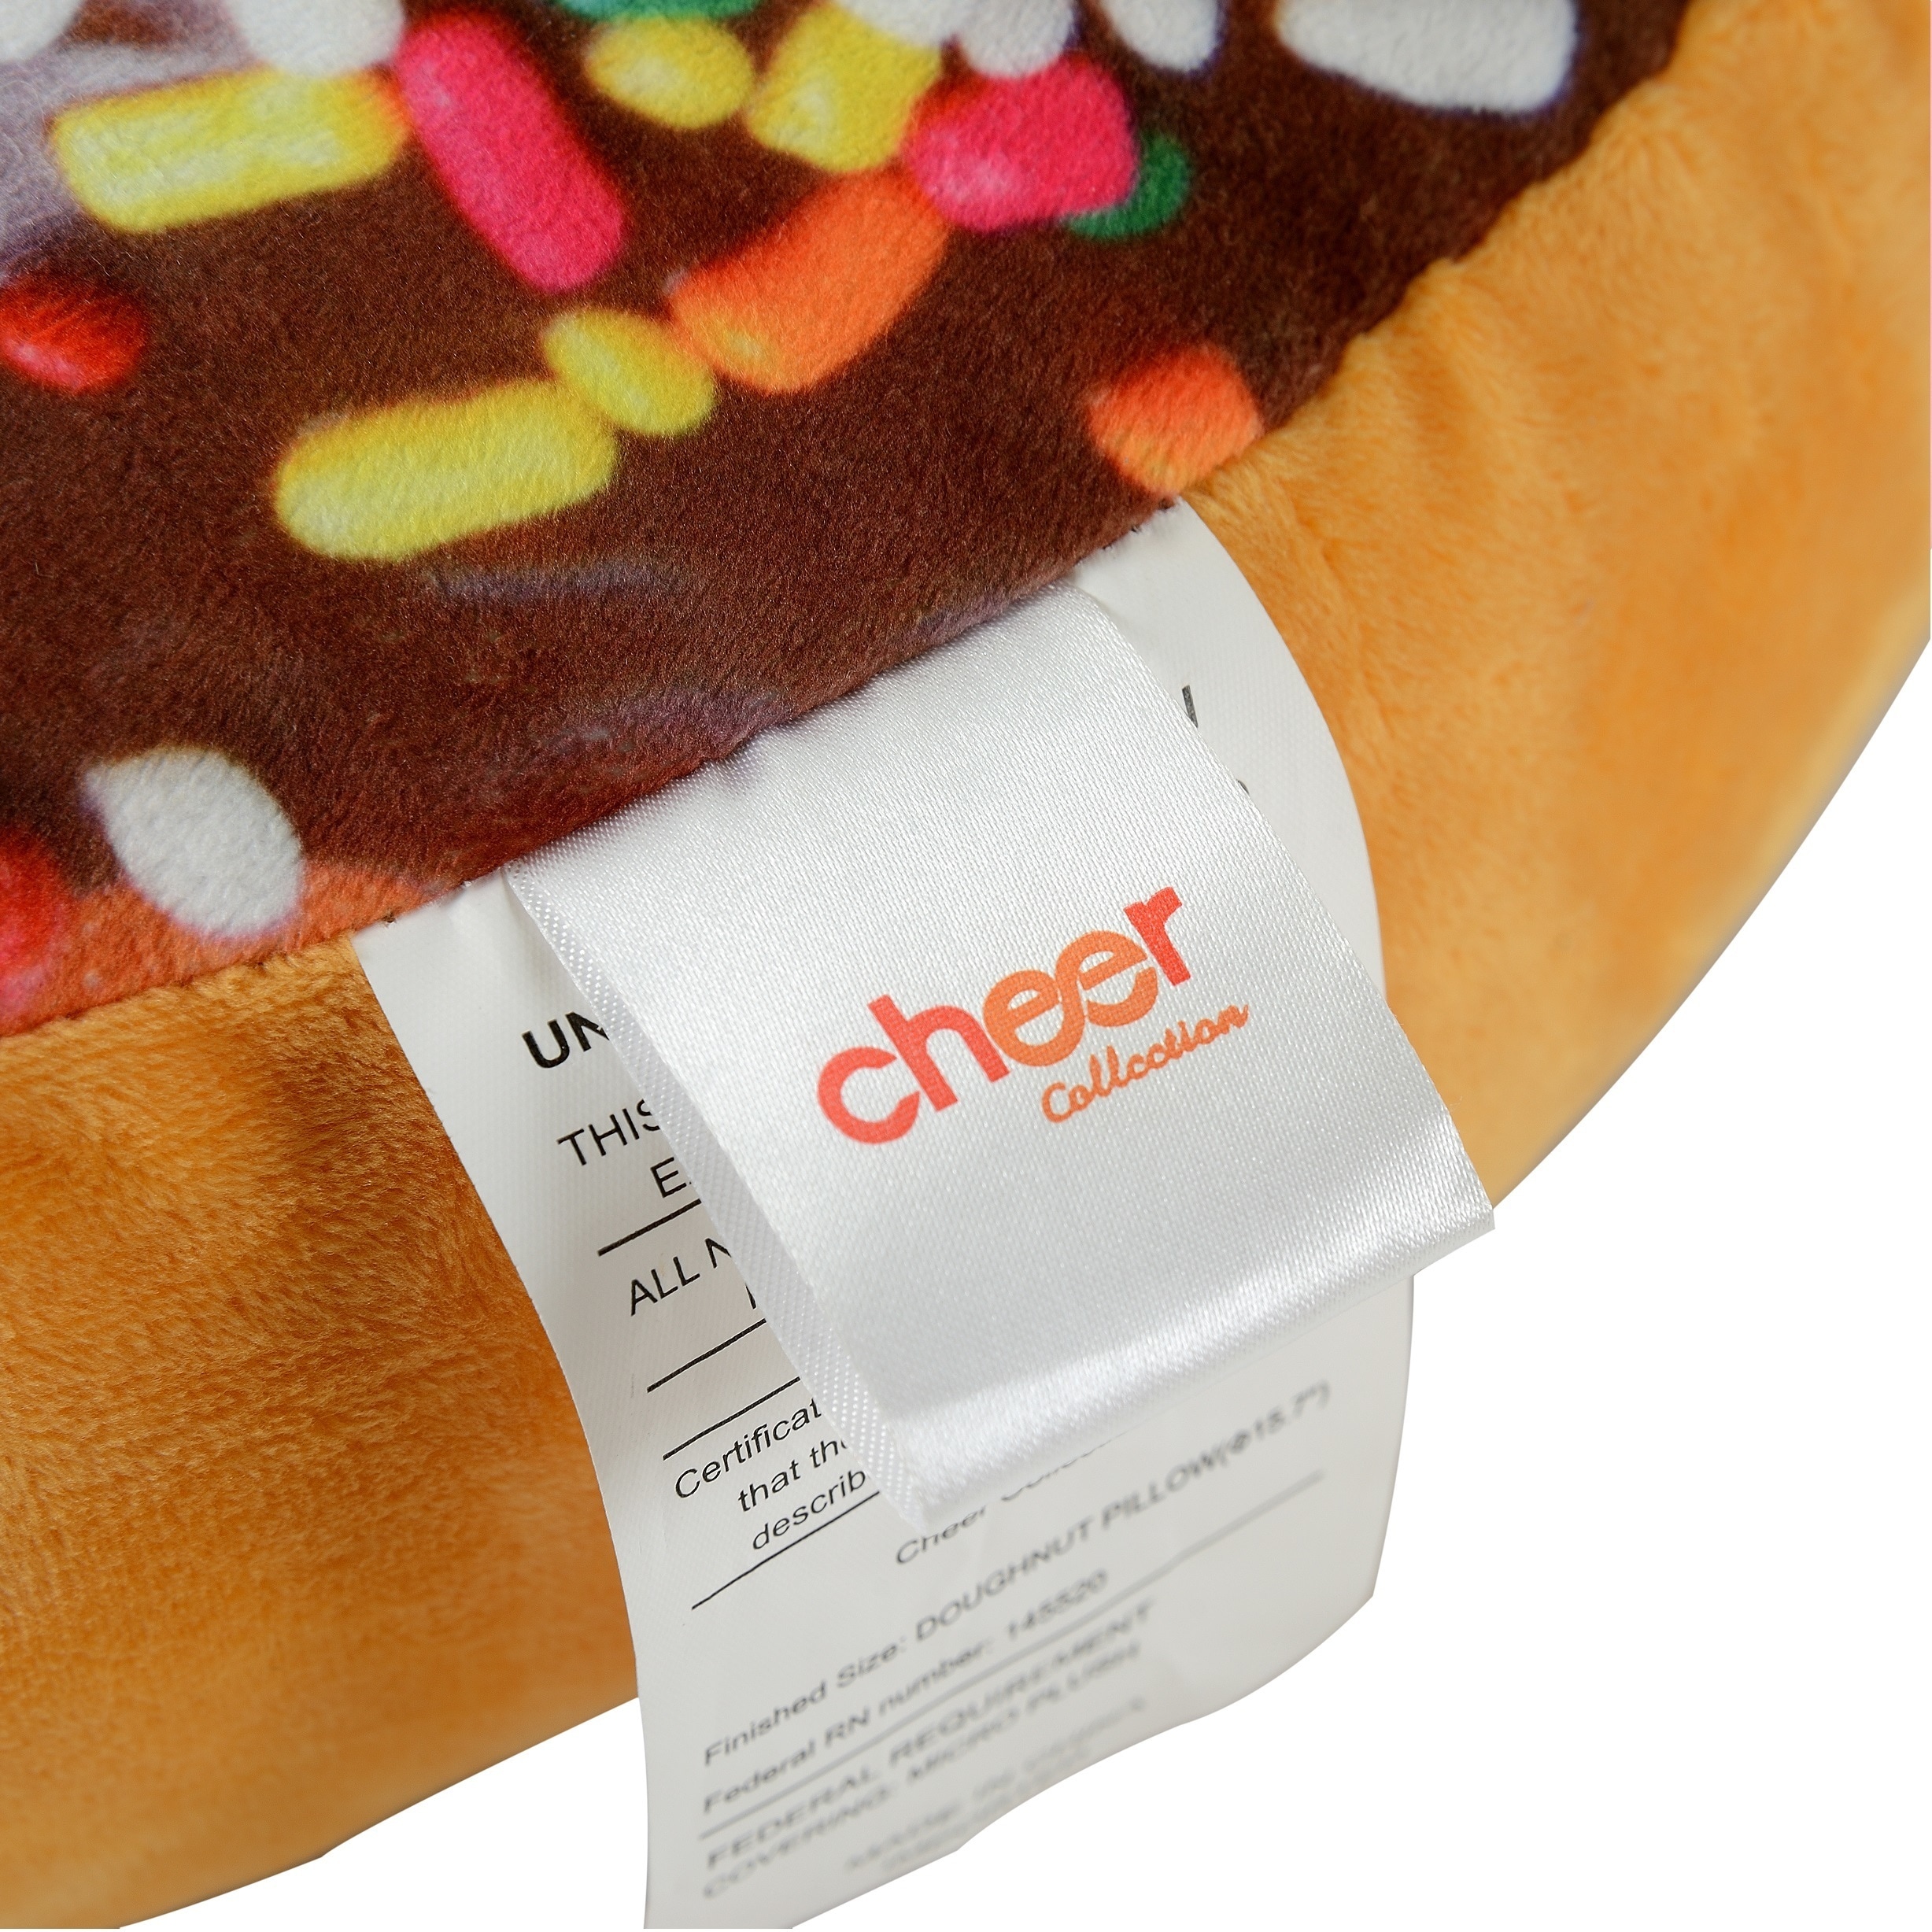 https://ak1.ostkcdn.com/images/products/16696244/Cheer-Collection-Reversible-Plush-Donut-Throw-Pillow-71889930-8f3f-477b-9bd1-a8cfa4ed672e.jpg